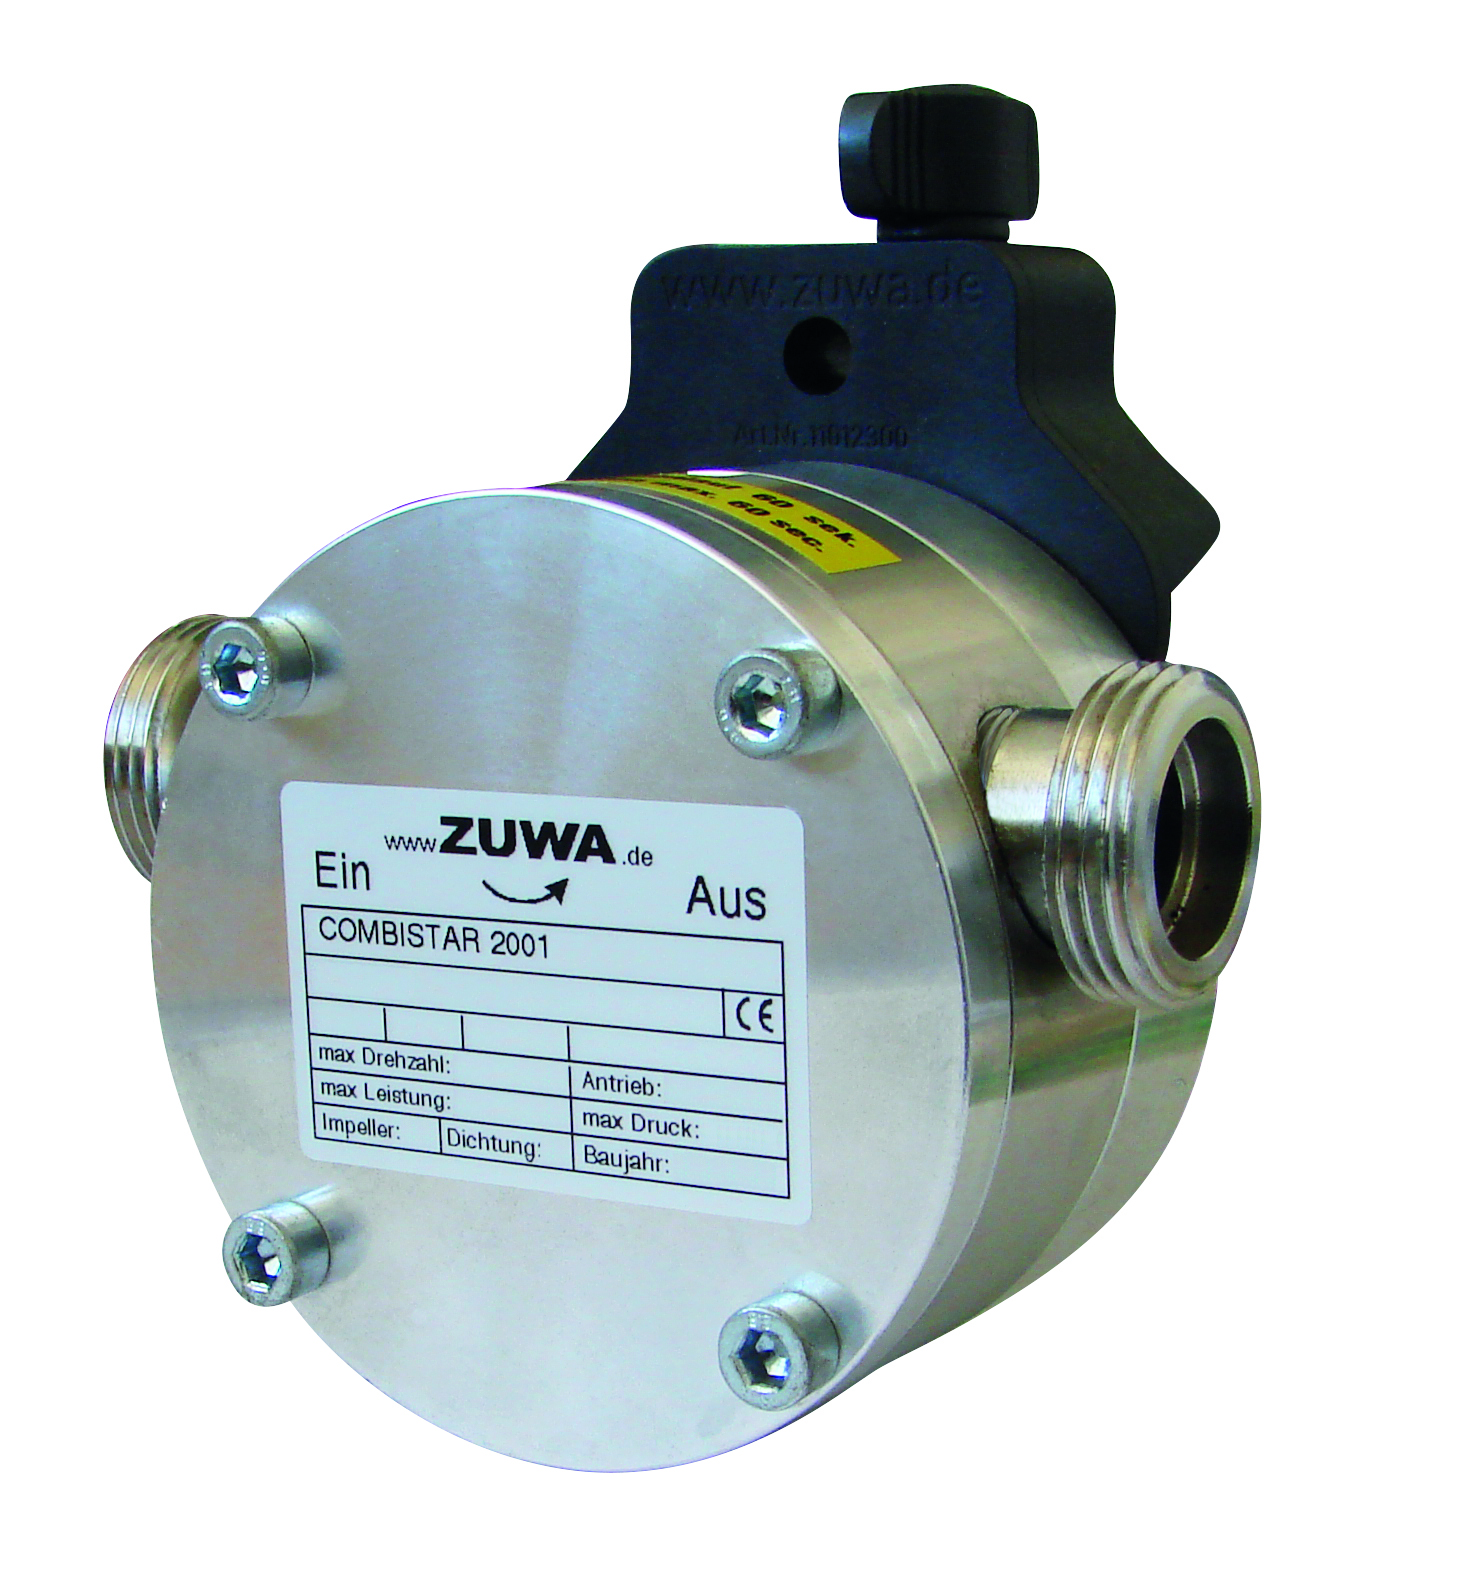 Zuwa Impellerpumpe COMBISTAR/V 2001-B, 60 l/min, Bohrmaschinenpumpe - 122381300AB